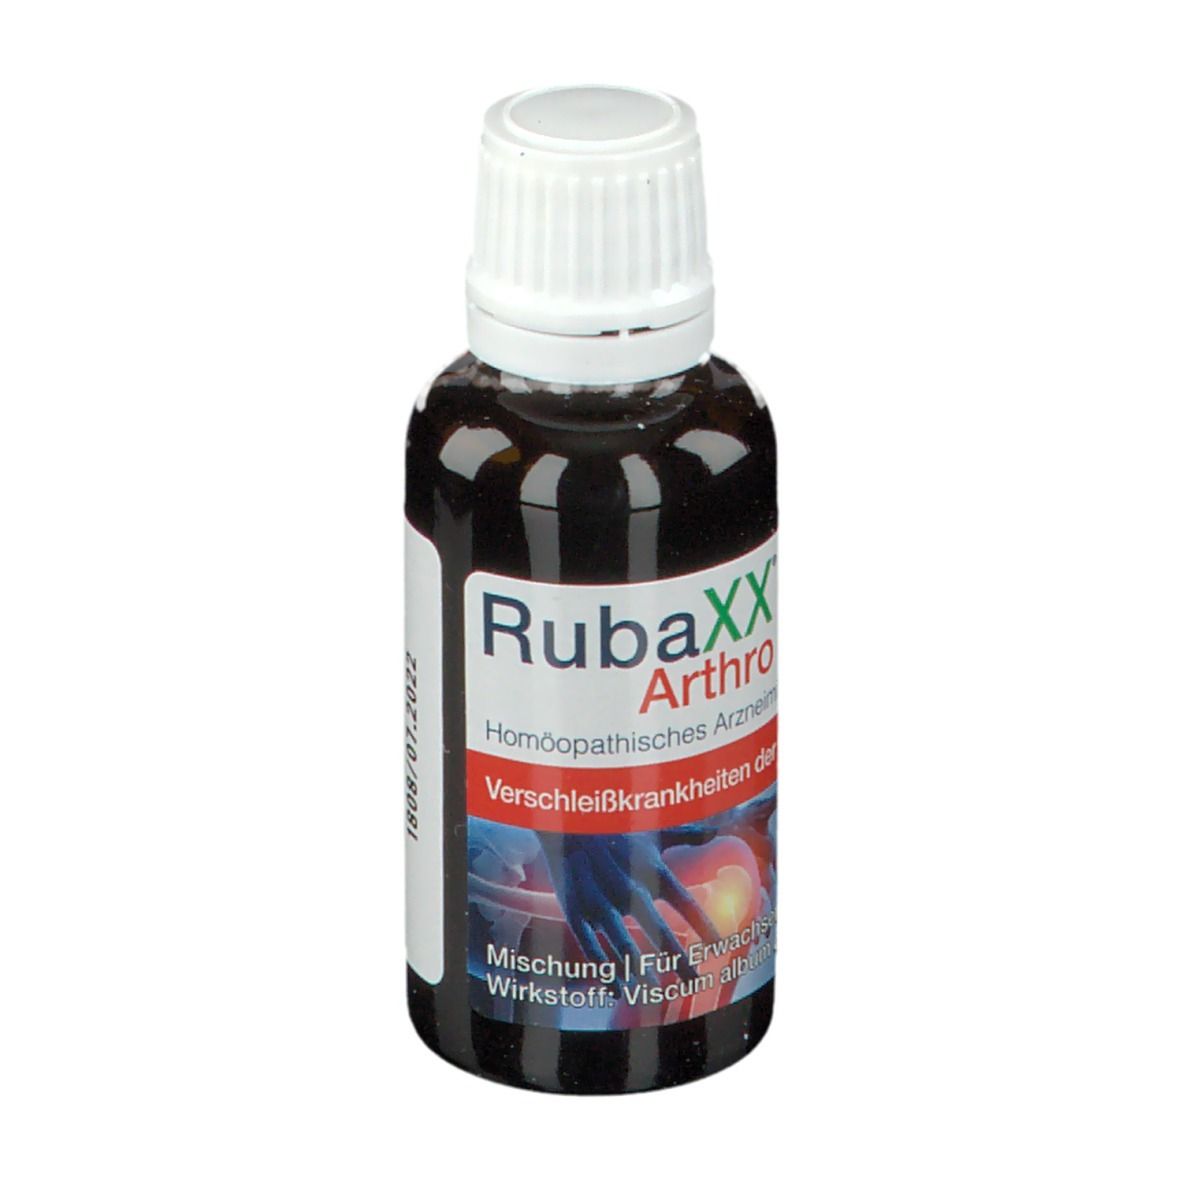 RubaXX® Arthro